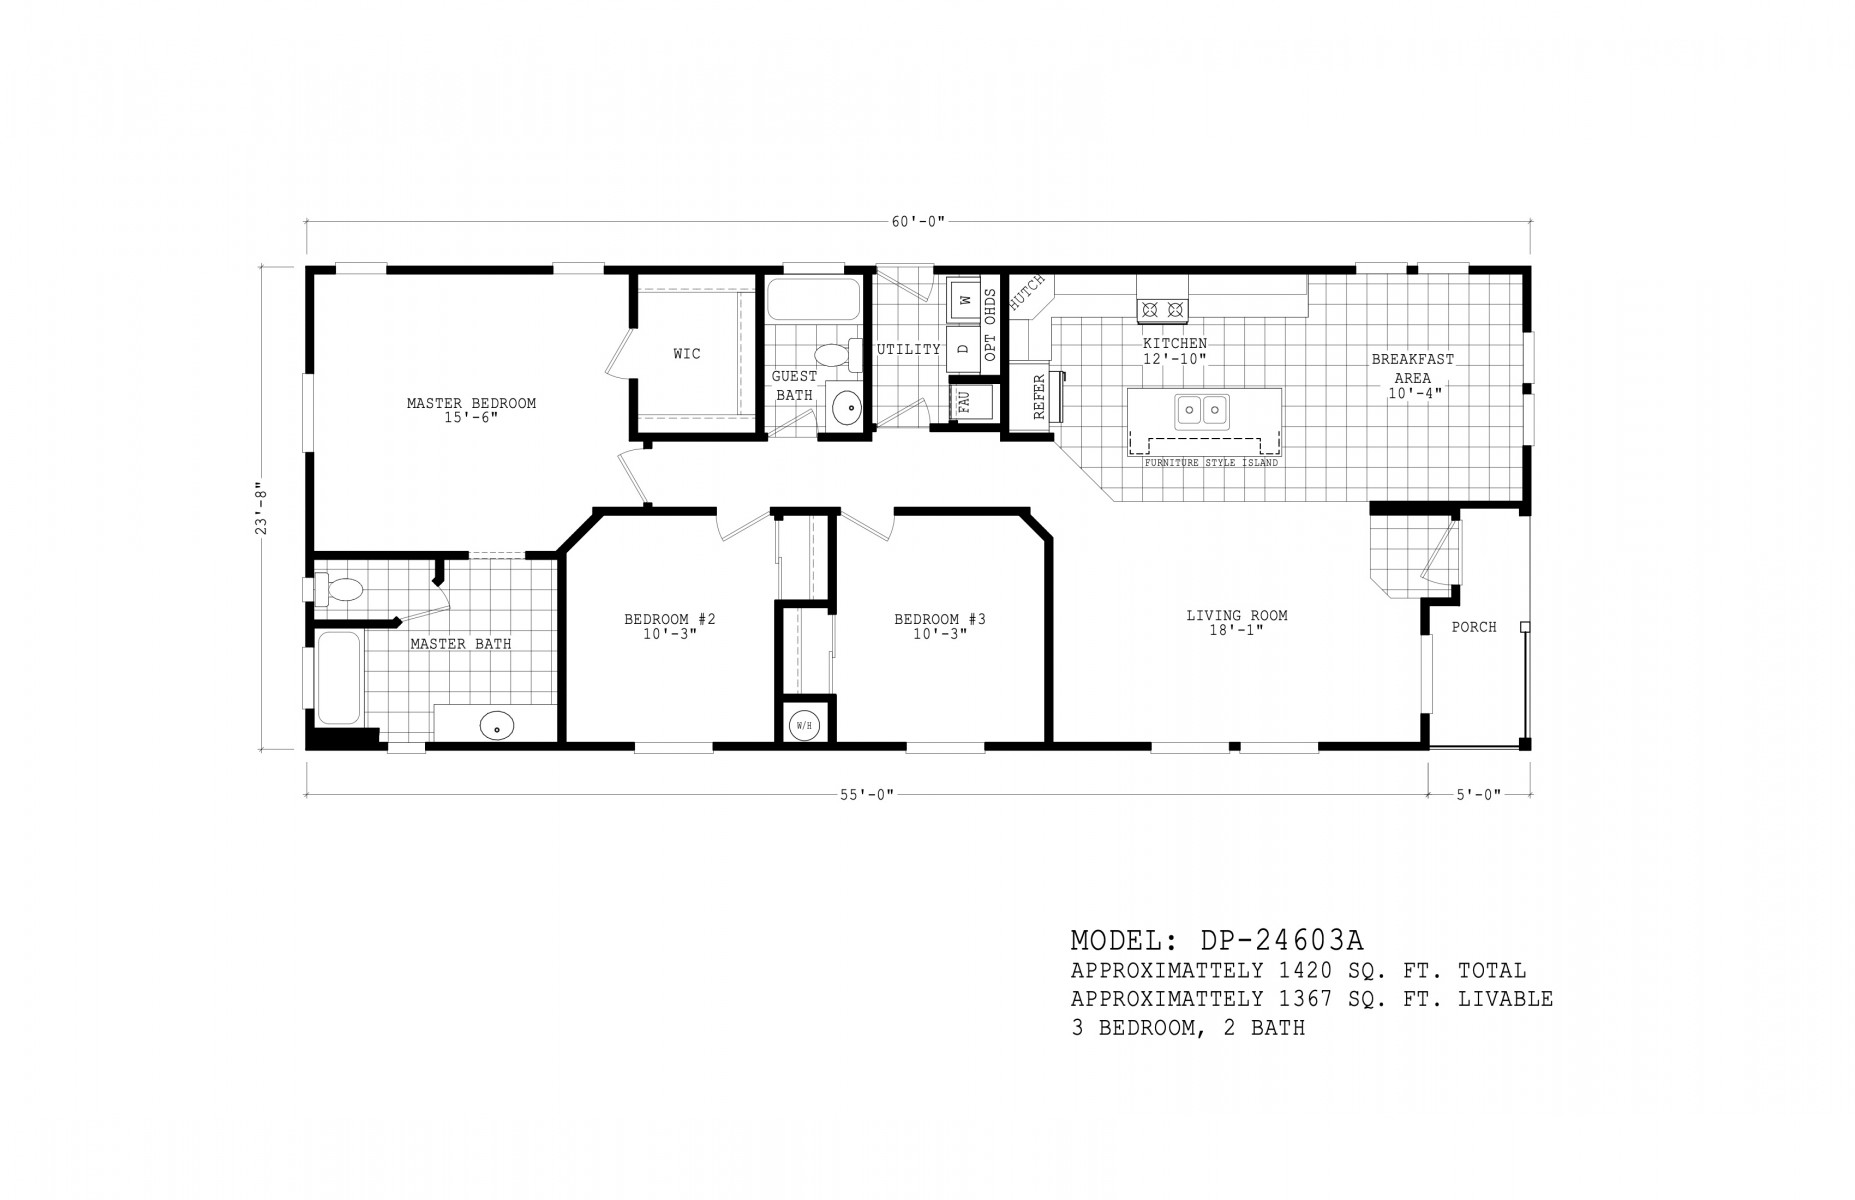 Homes Direct Modular Homes - Model DP24603A - Floorplan